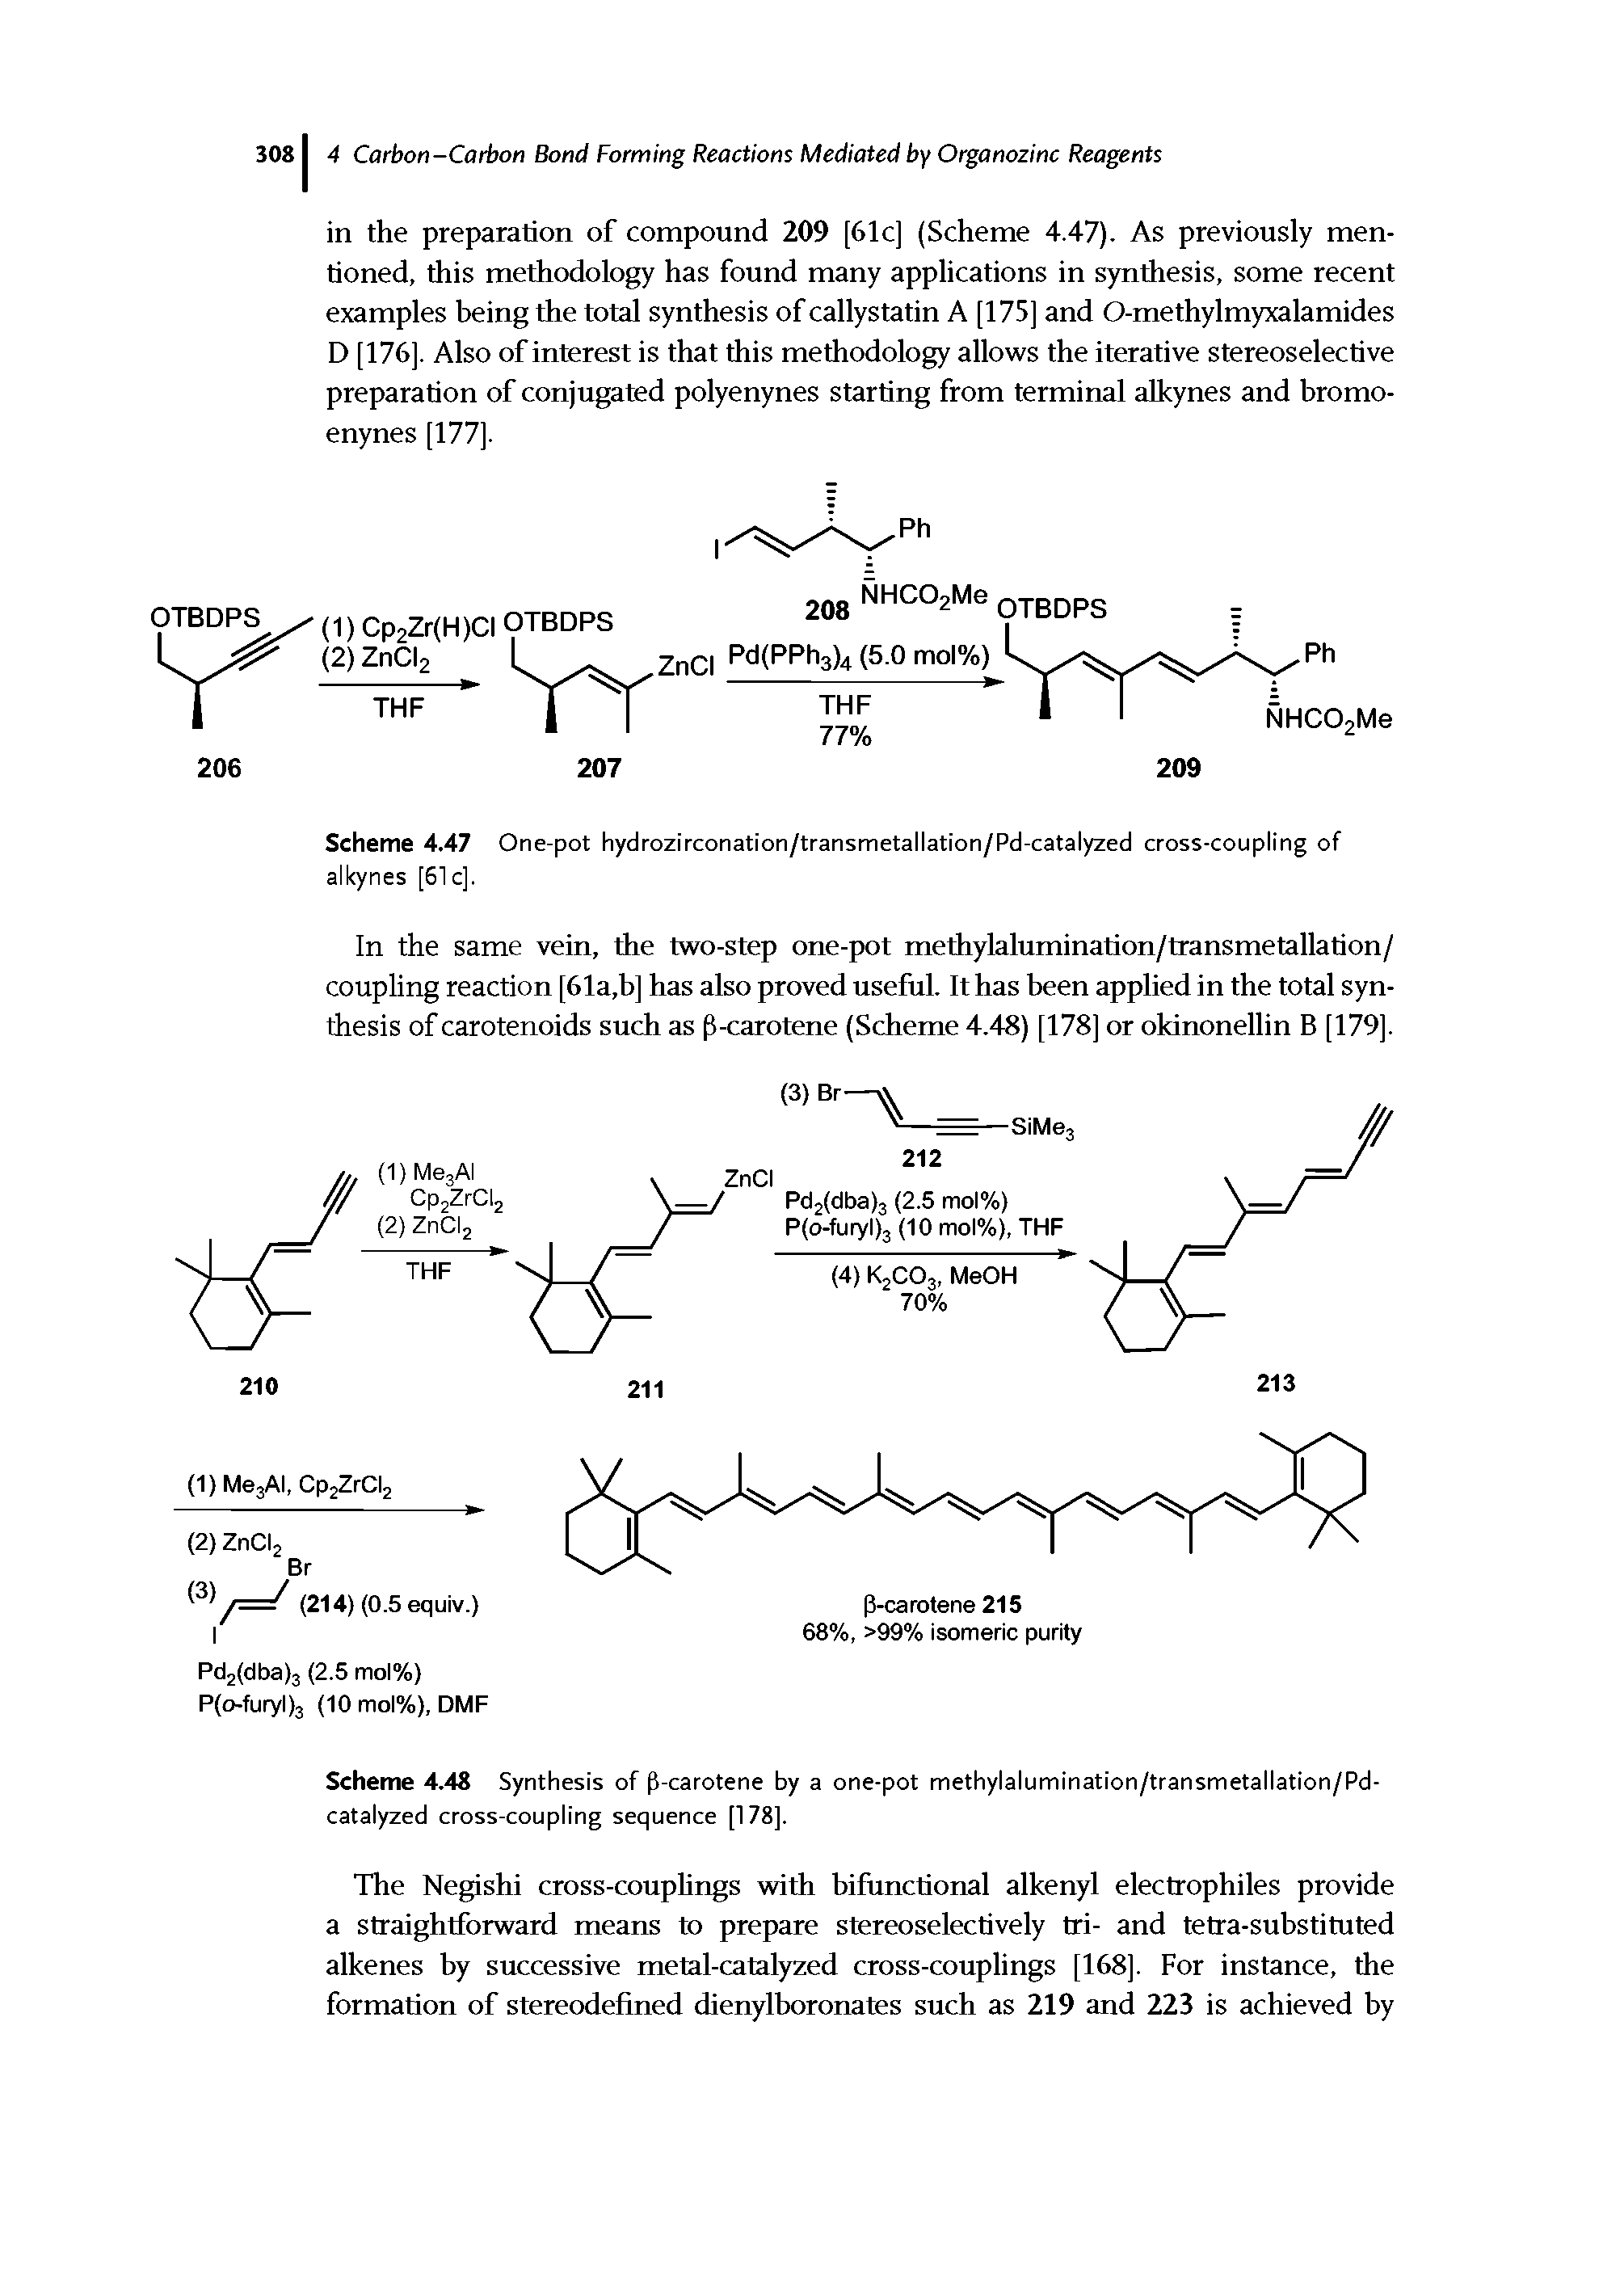 Scheme 4.47 One-pot hydrozirconation/transmetallation/Pd-catalyzed cross-coupling of alkynes [61 cj.